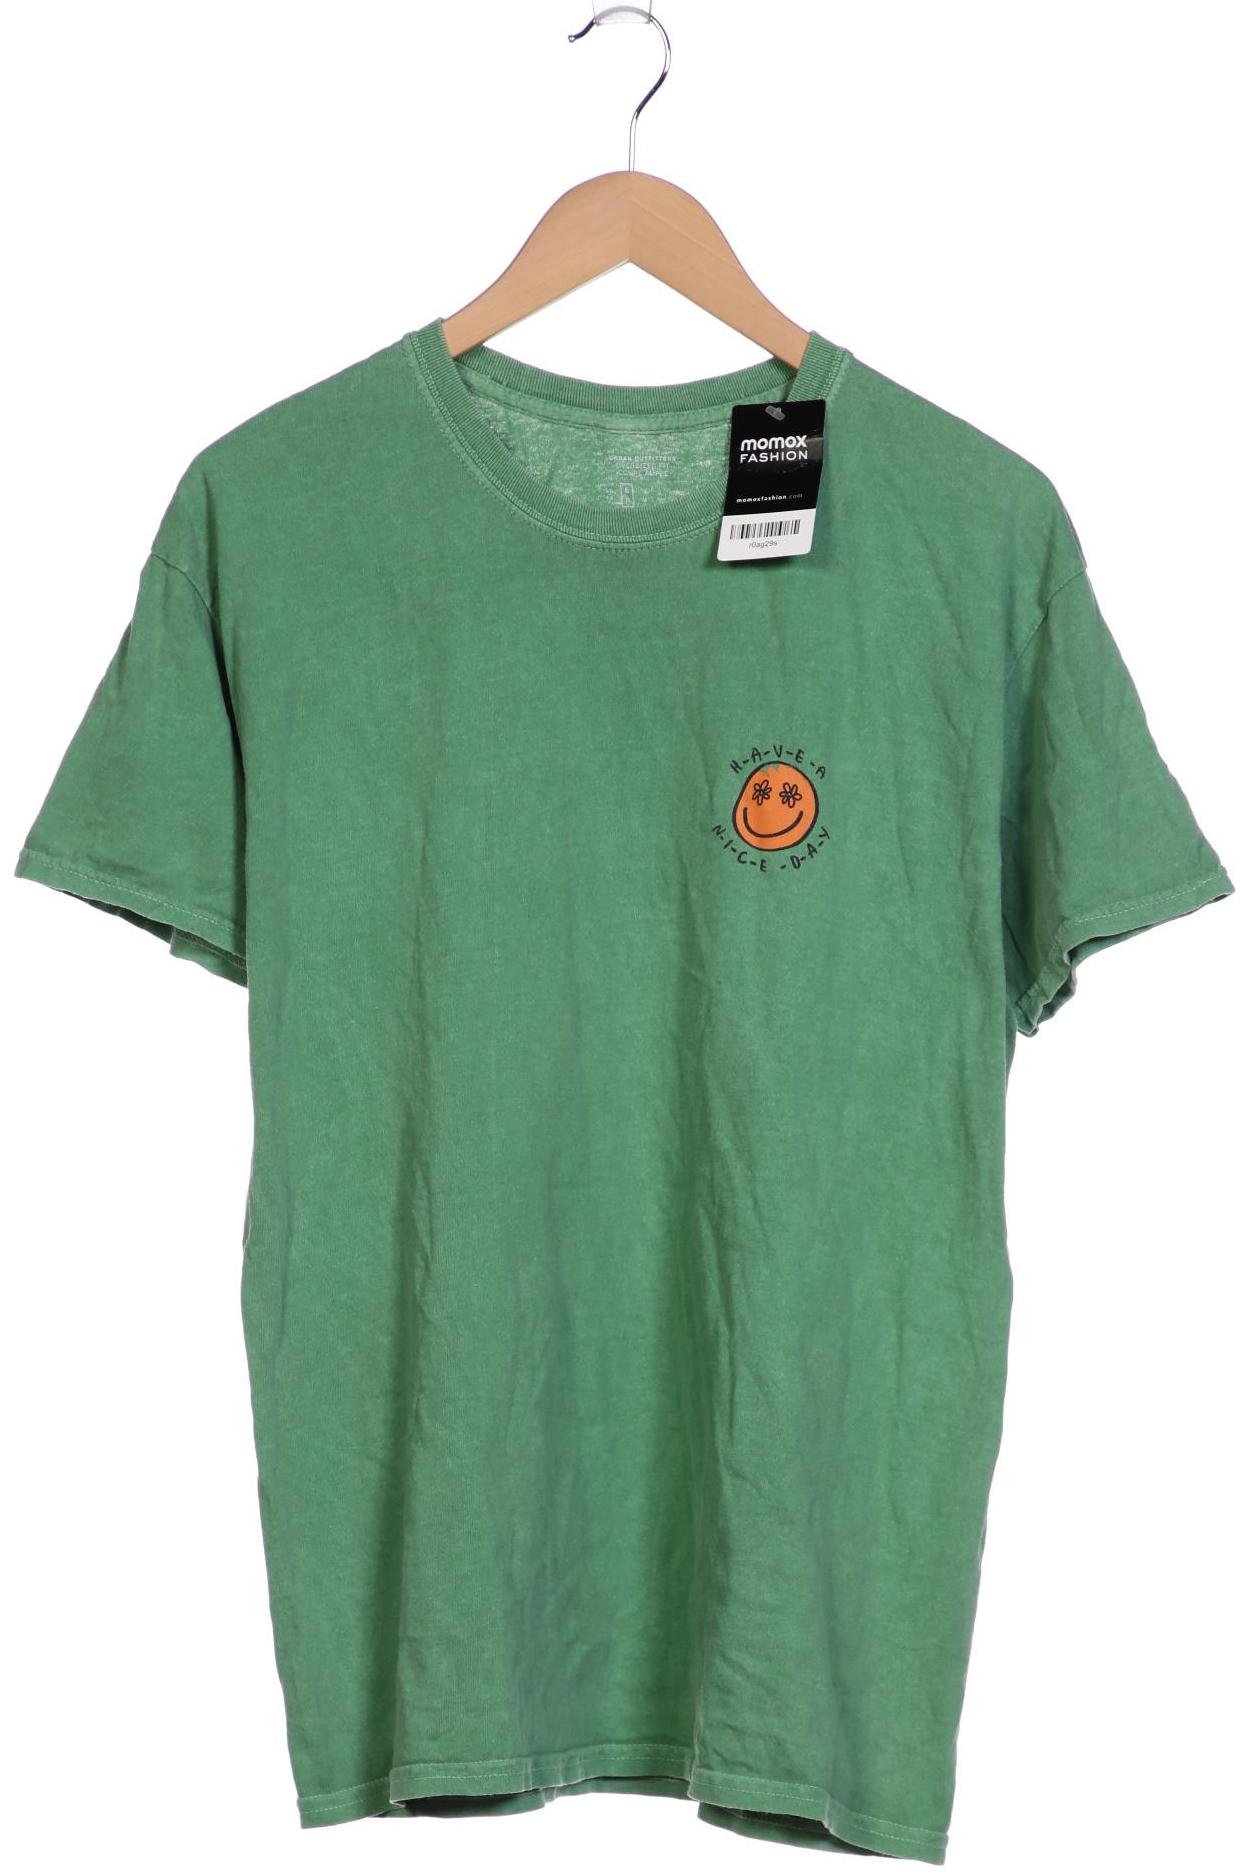 Urban Outfitters Herren T-Shirt, grün von Urban Outfitters